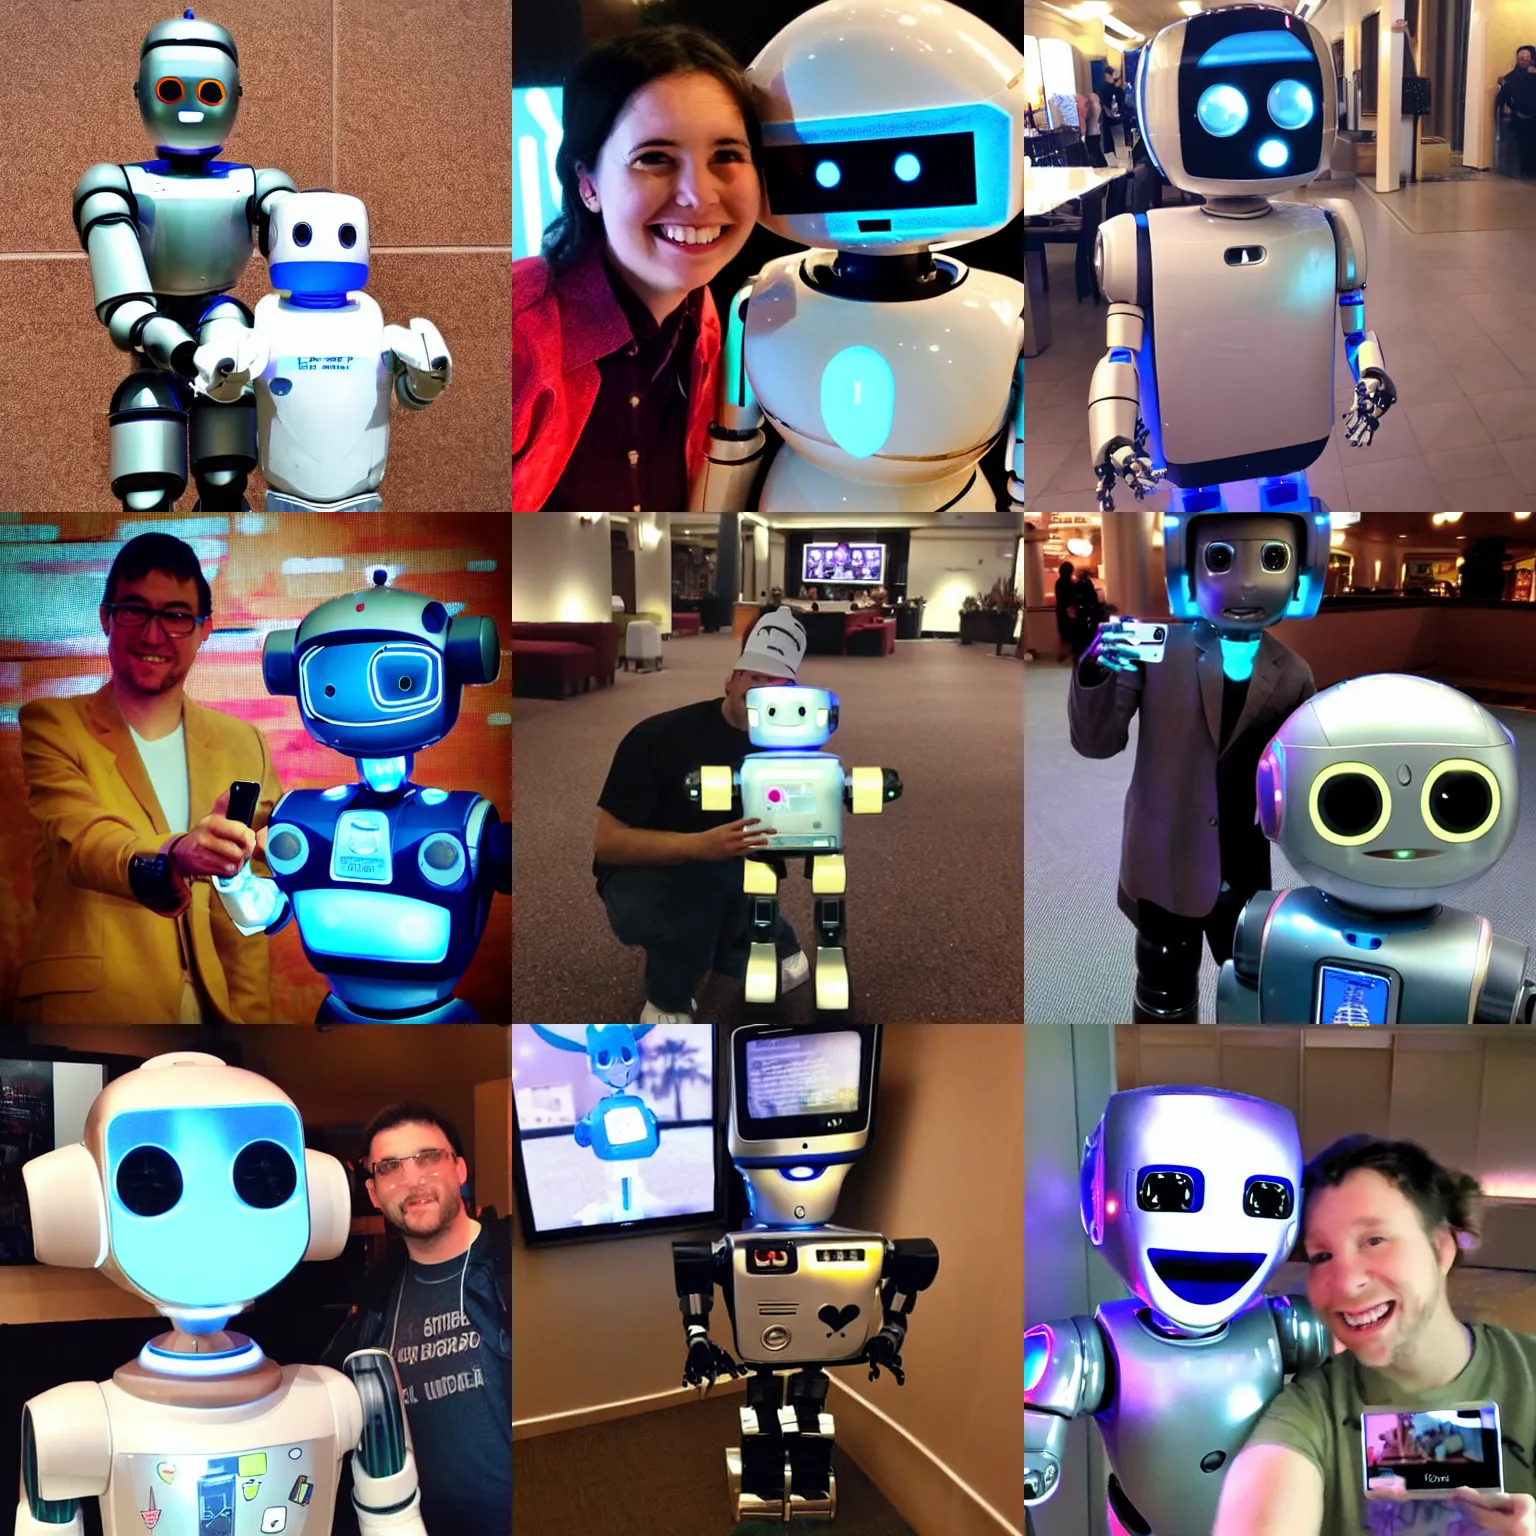 Prompt: <photo hd crisp location='las vegas, nv' year=2025><robot friendly cute adorable desires='hug'>selfie with a robot i found</robot></photo>